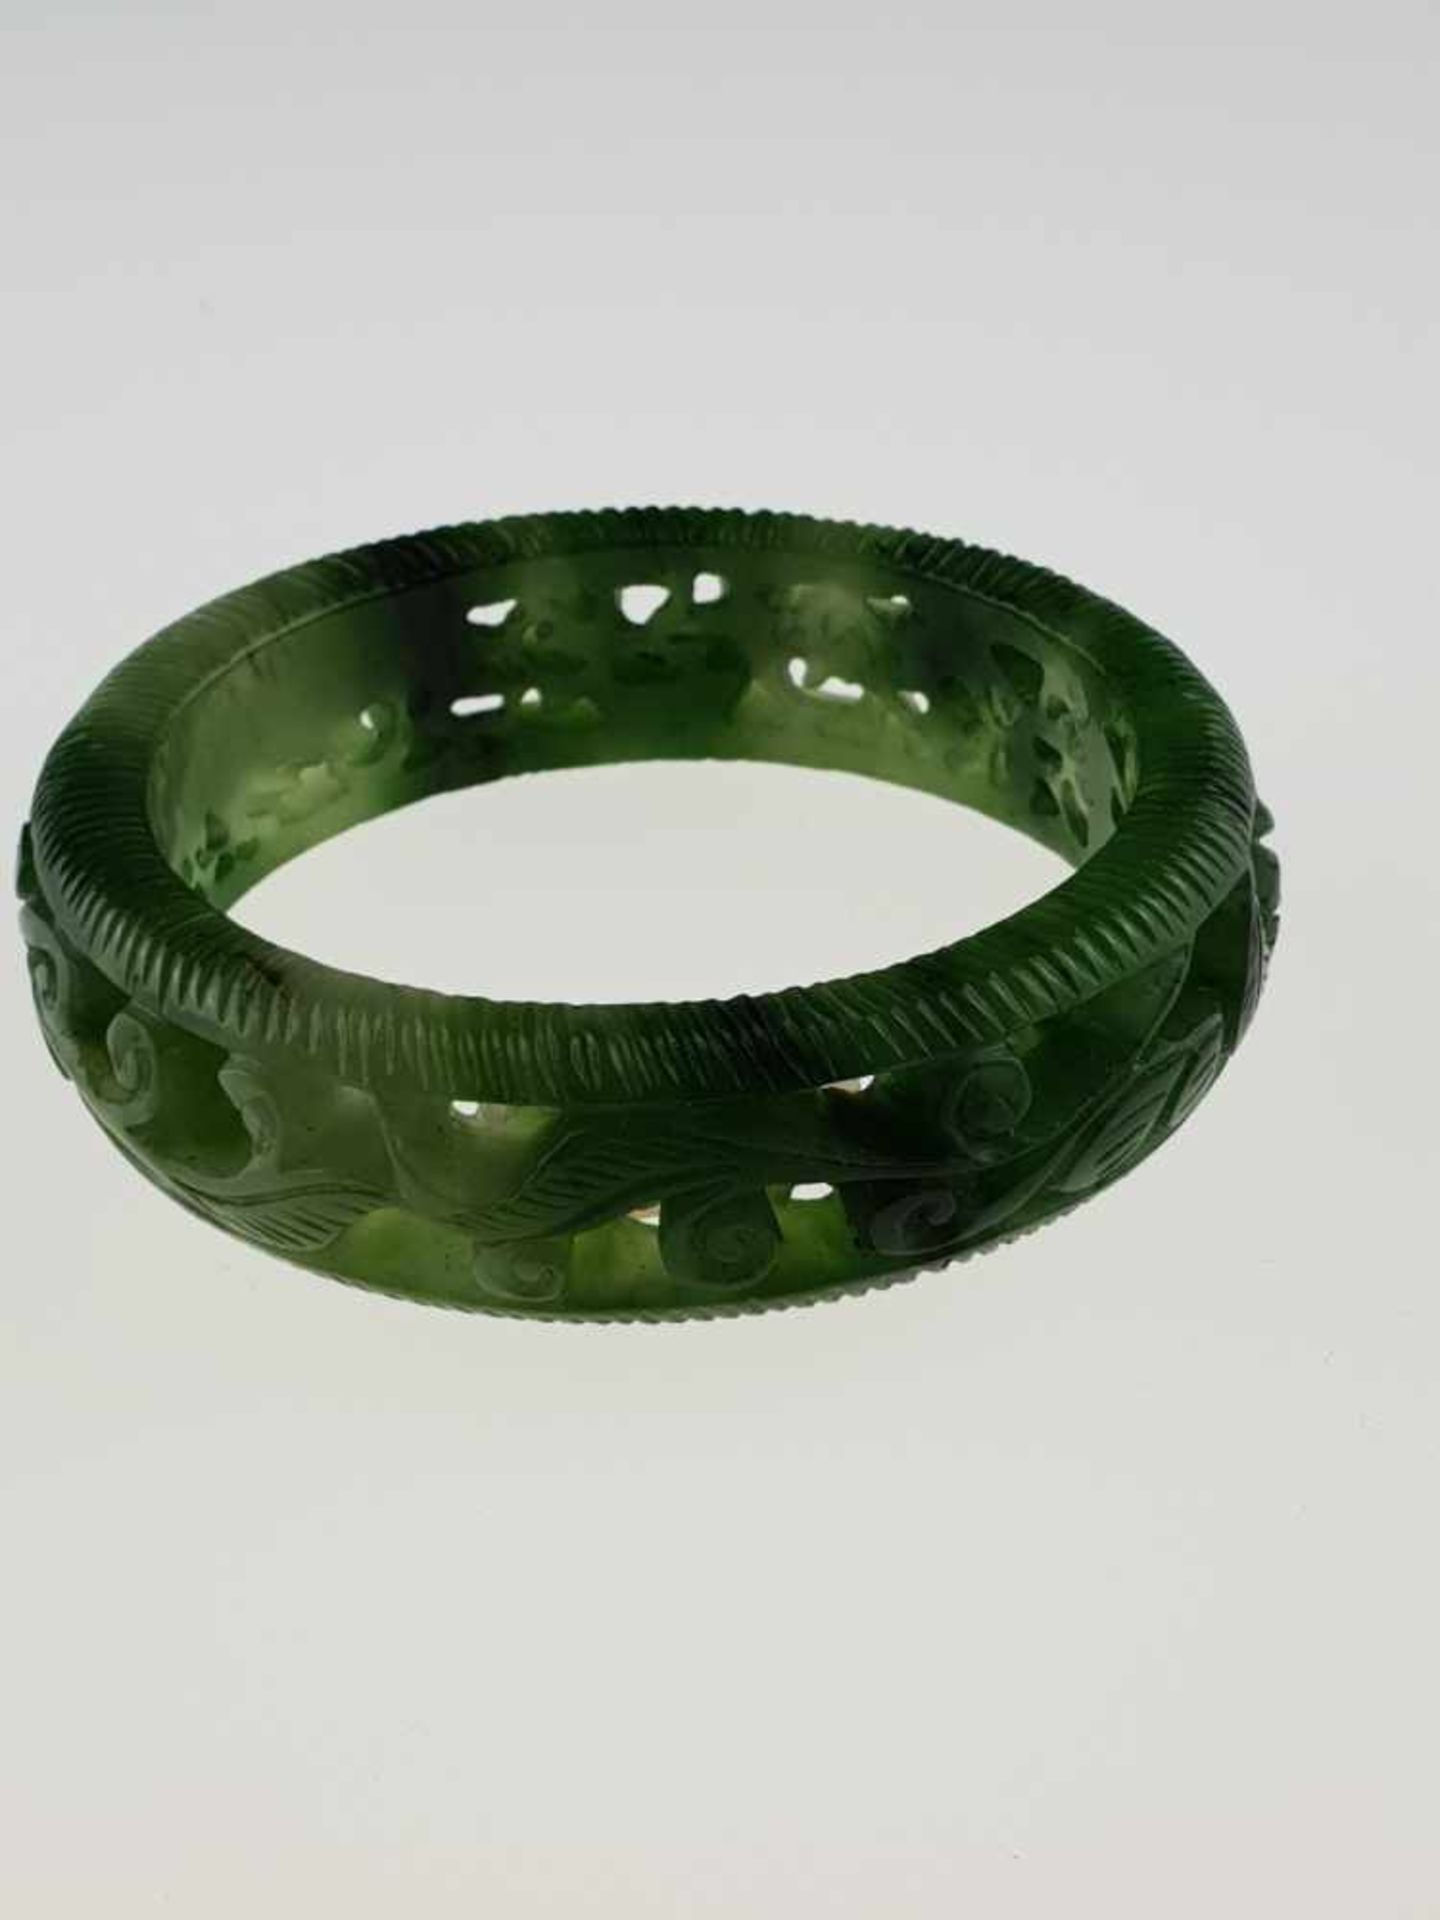 Jadearmreif - China, spinatgrüne Jade, filigrane Durchbrucharbeit mit Rankenmotiven, fein poliert, - Bild 4 aus 4